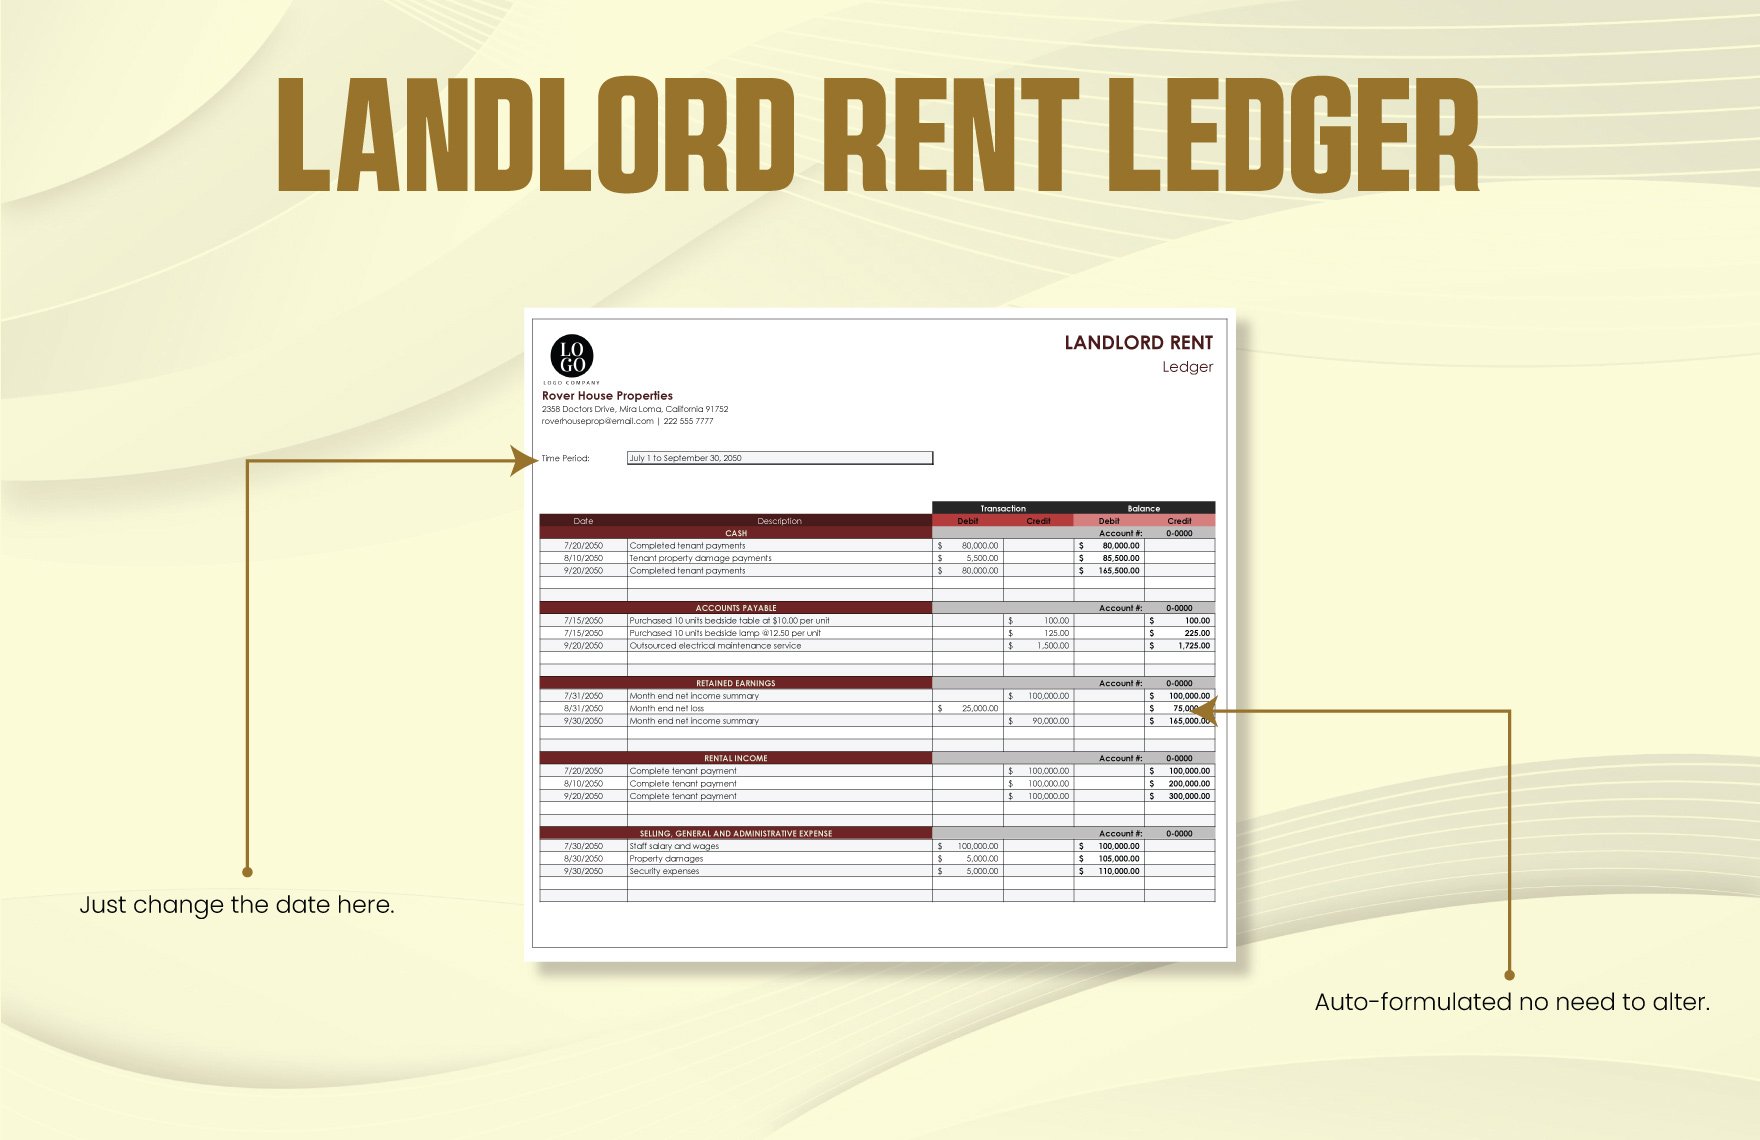 Landlord Rent Ledger Template